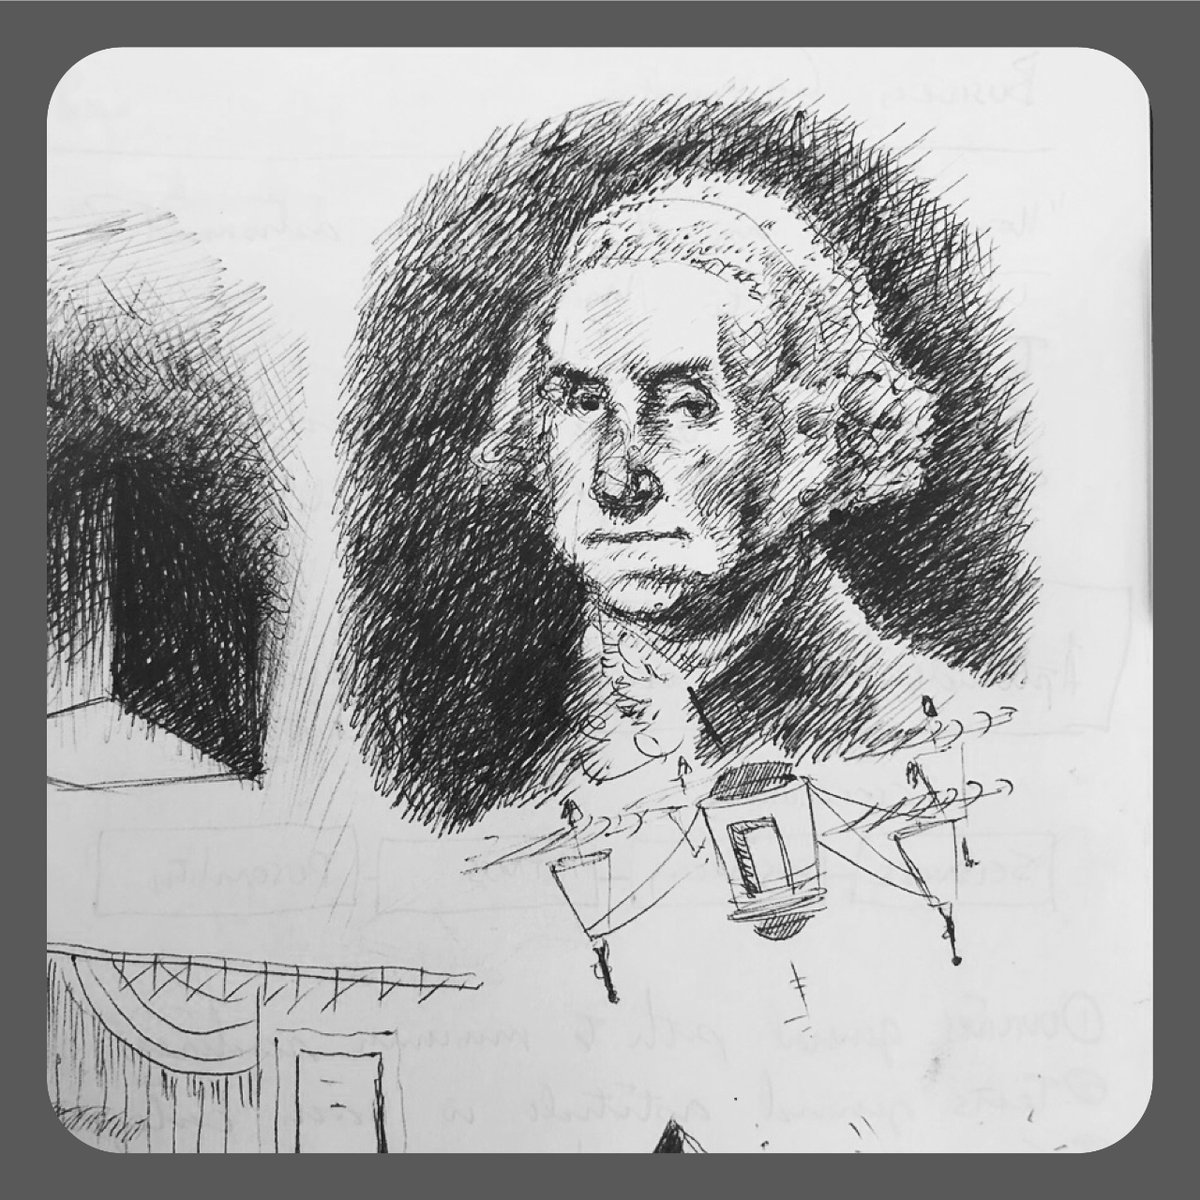 Sketch of #georgewashington.  A fascinating life.  -
-
#Illustration #Sketchbook #DoodleArt #CreativeDoodles #ArtSketches #DrawingDaily #Sketching #InkDrawing #IllustratorsOnInstagram #SketchbookArt #IllustrationArtists #DigitalIllustration #HandDrawn #IllustrationCommunity